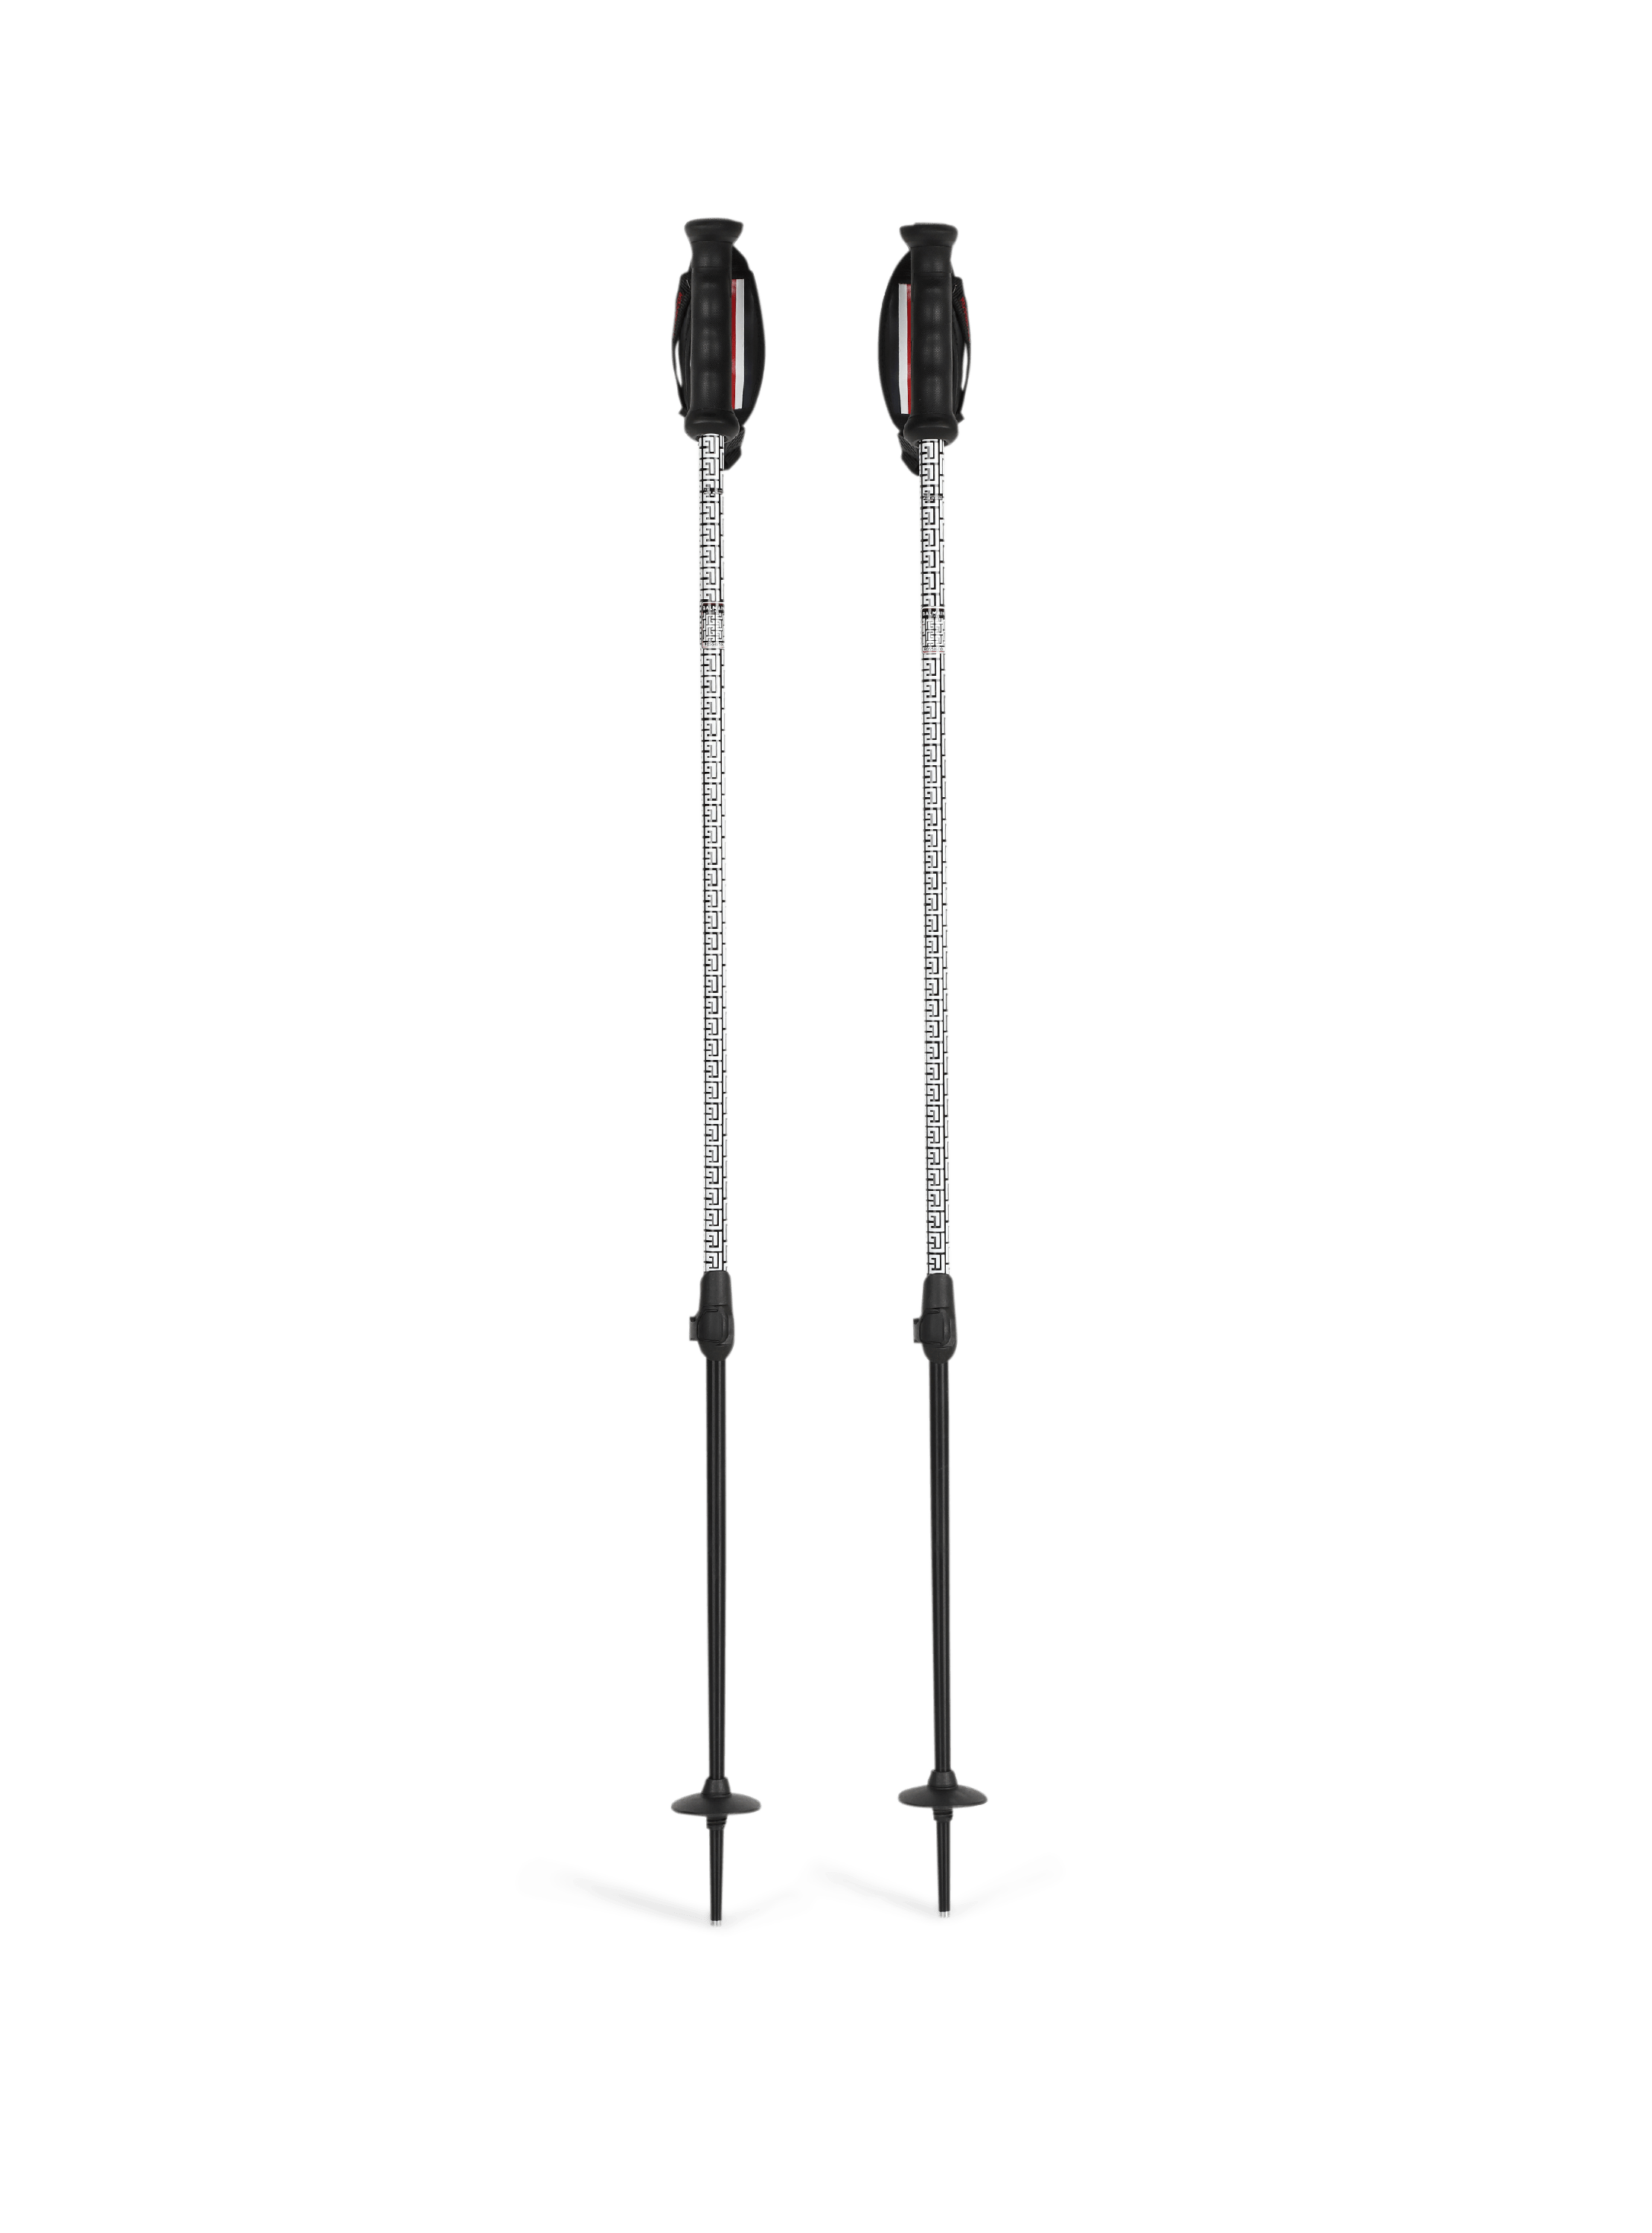 Balmain x Rossignol - Bâton de ski Rossignol à motif monogramme Balmain